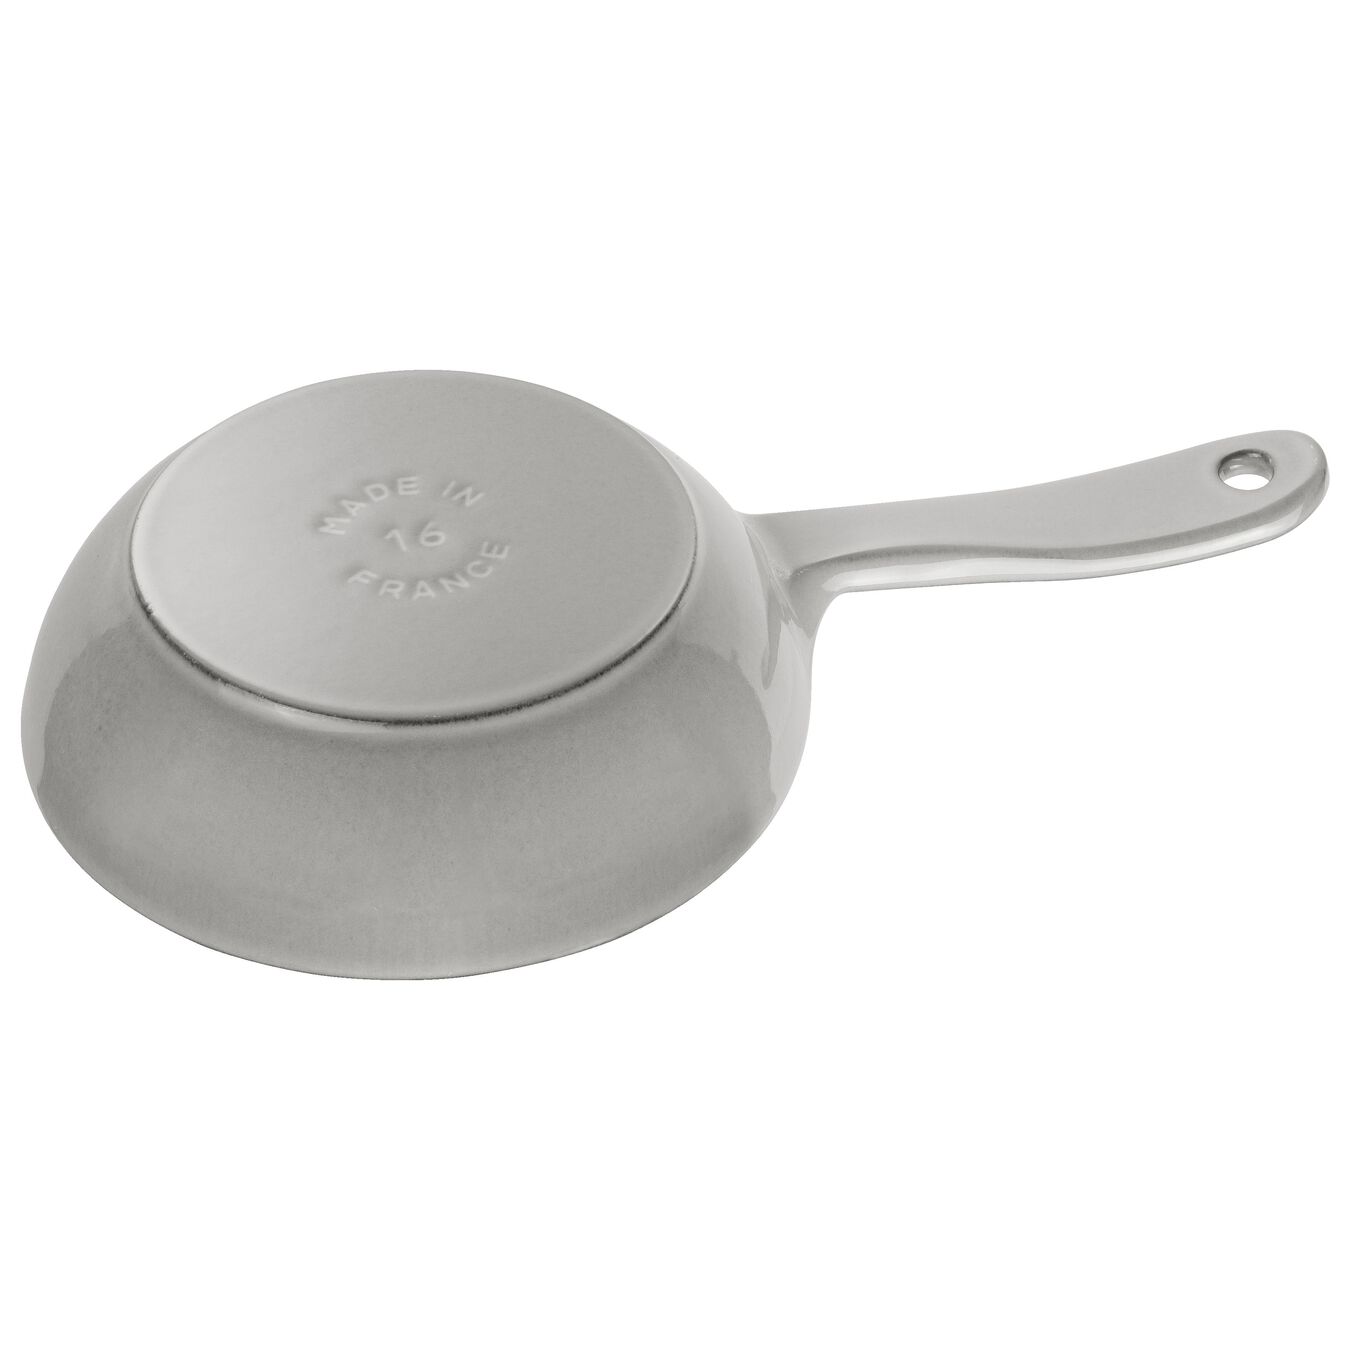 16 cm Cast iron Frying pan graphite-grey,,large 2